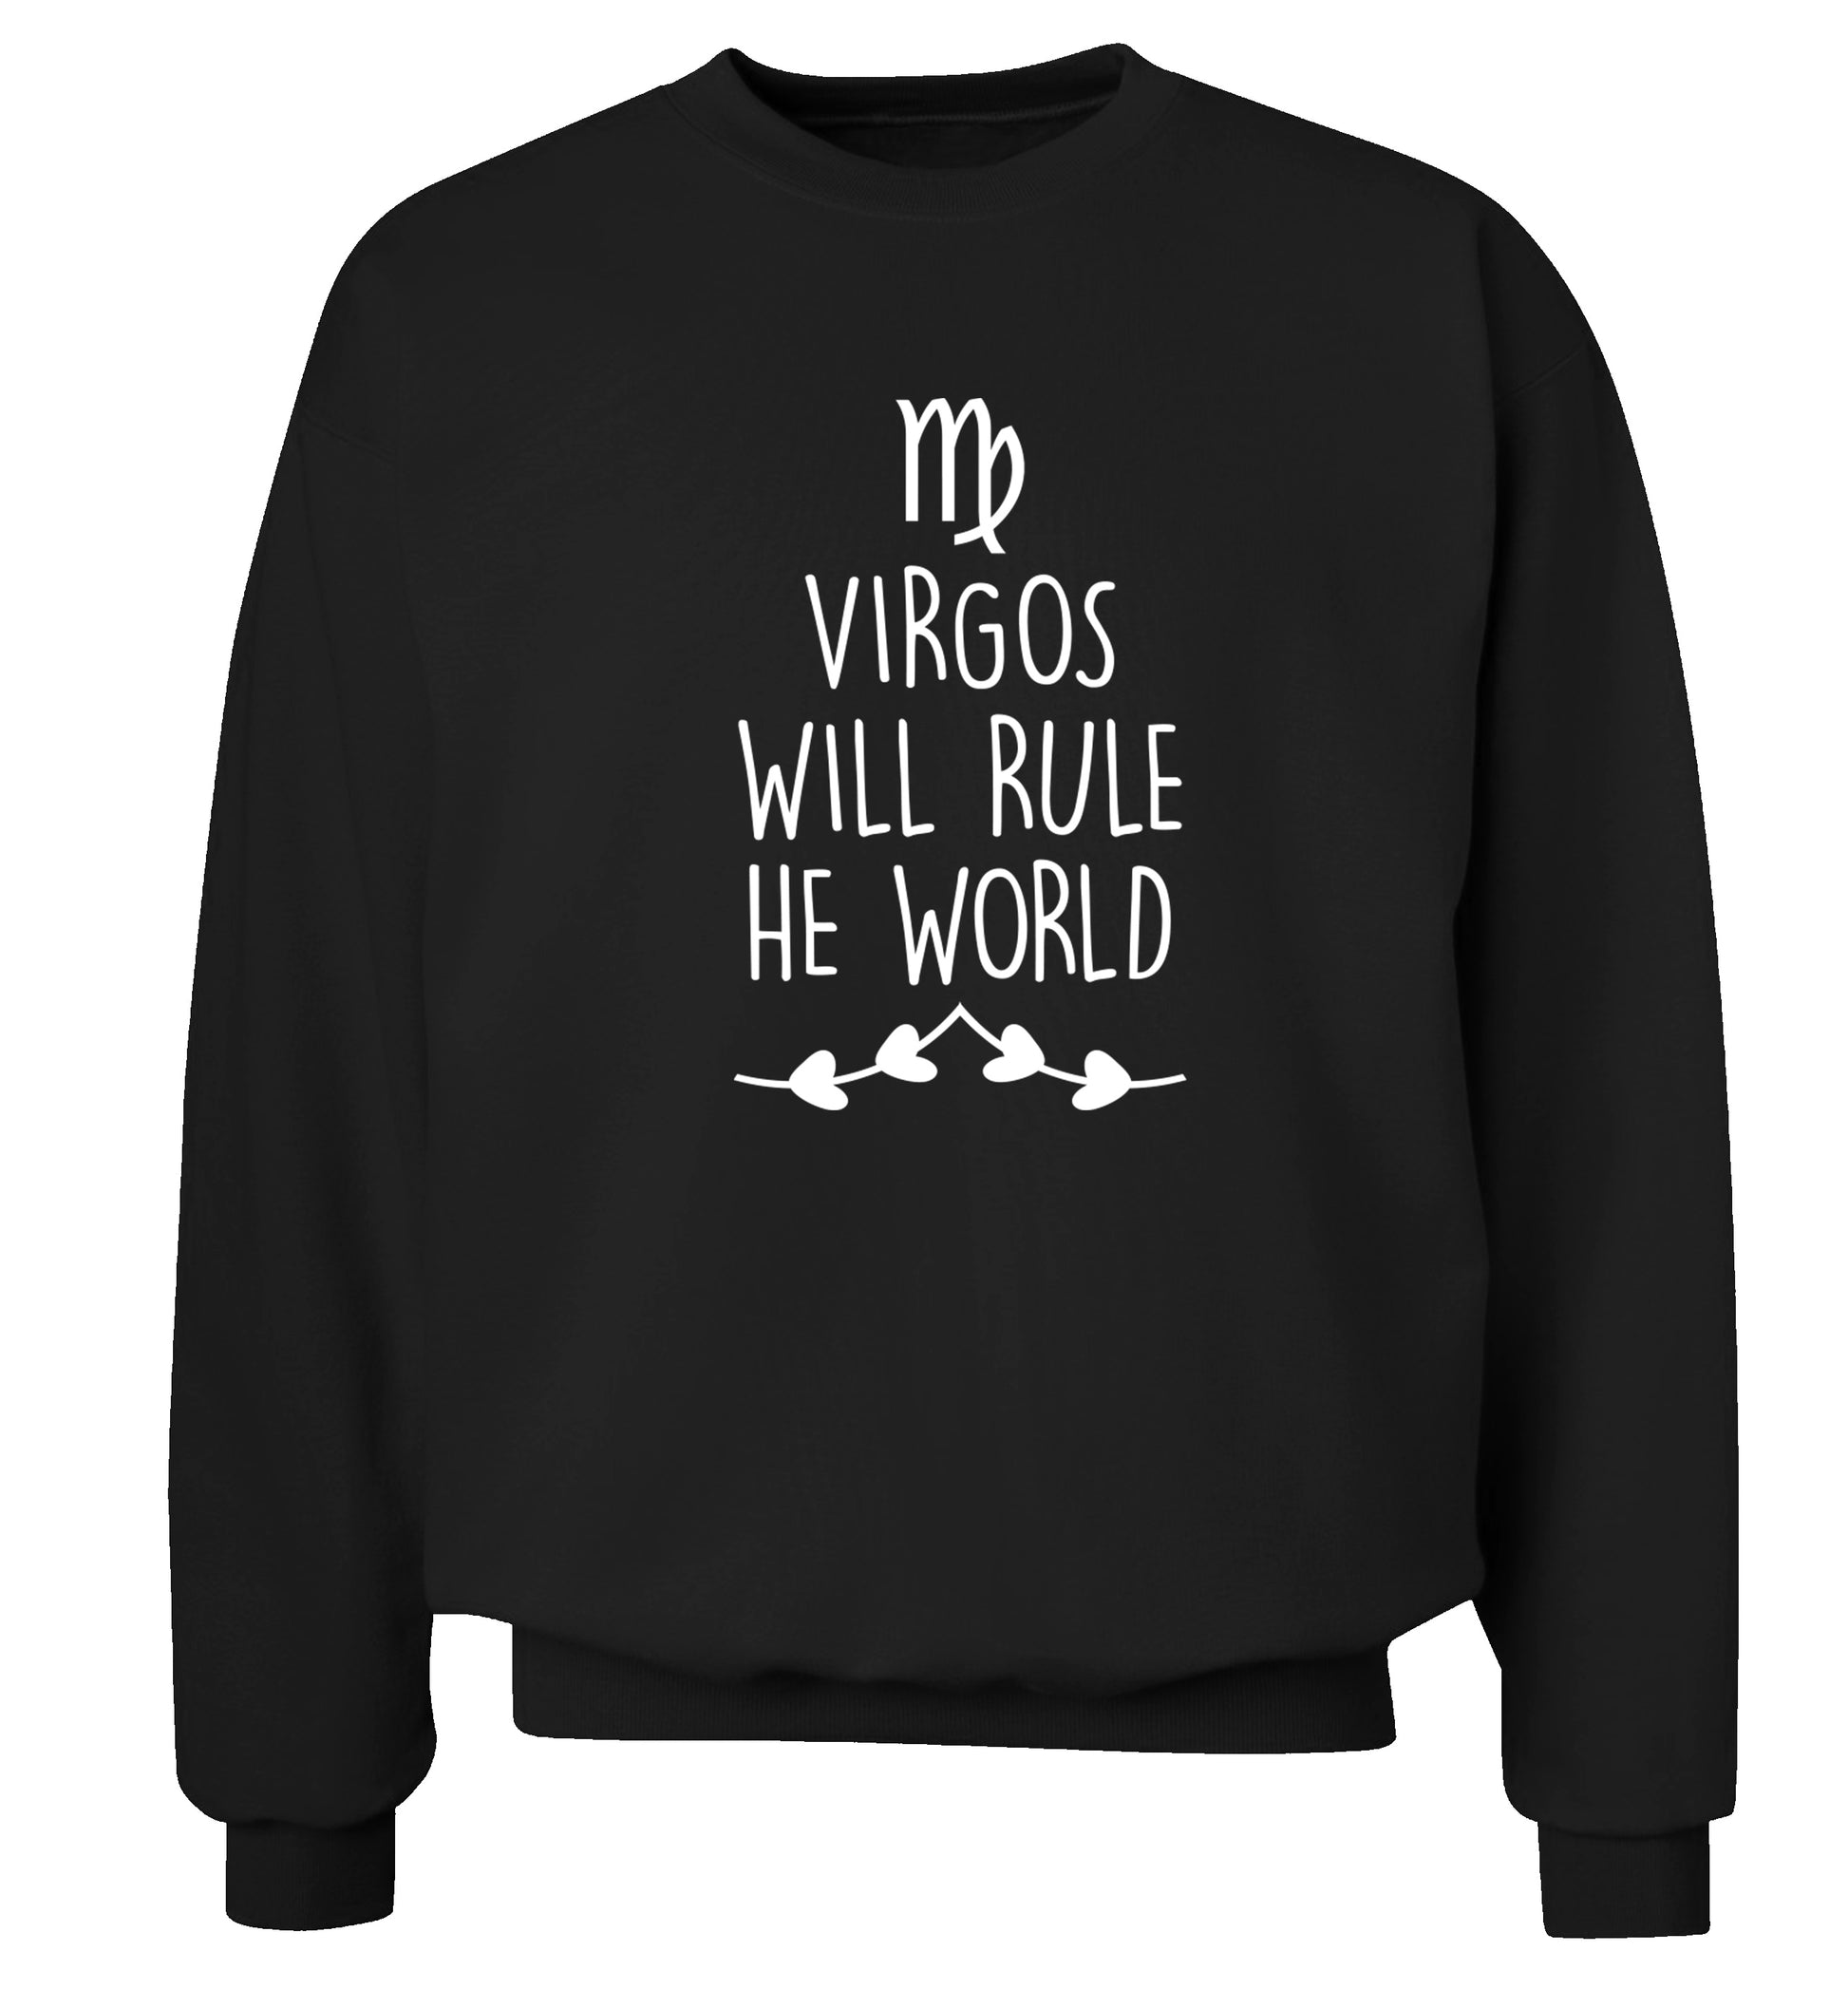 Virgos will rule the world Adult's unisex black Sweater 2XL